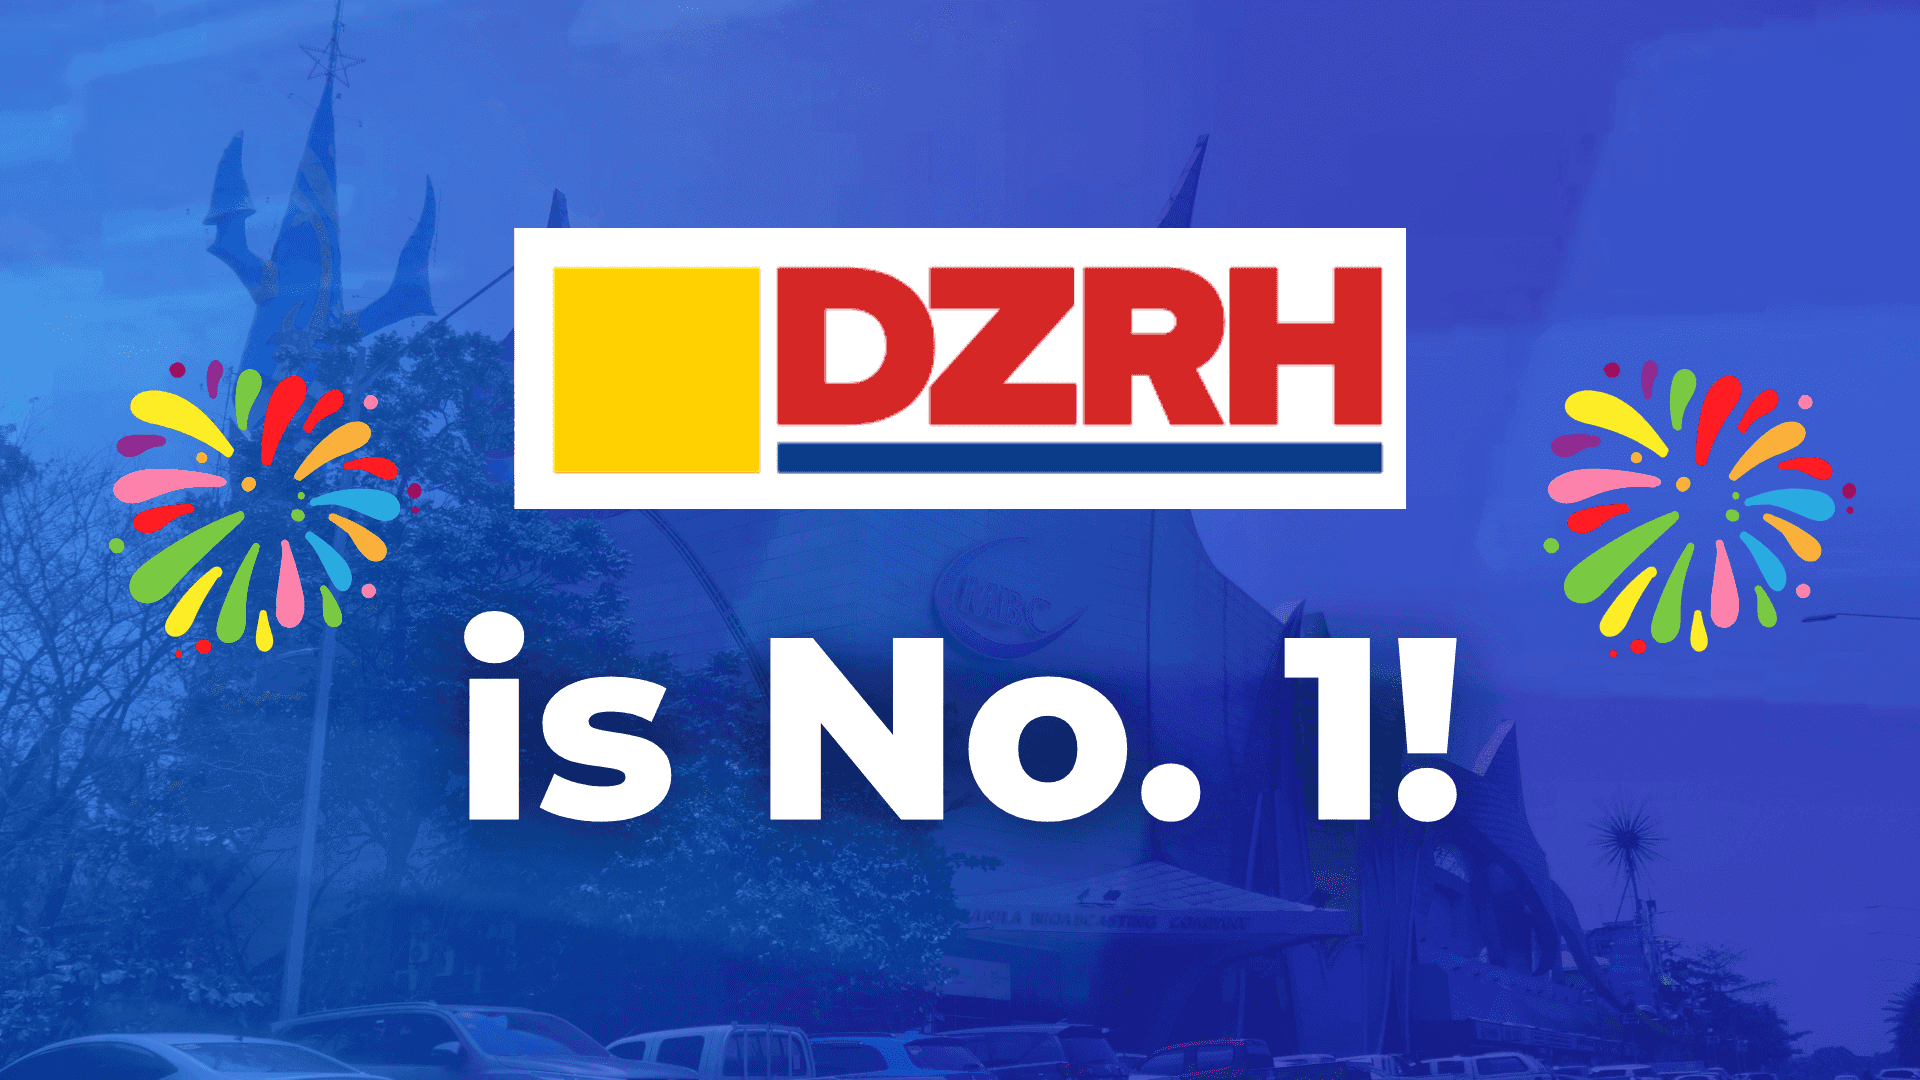 DZRH is No. 1 AM radio in Metro, Mega Manila - survey